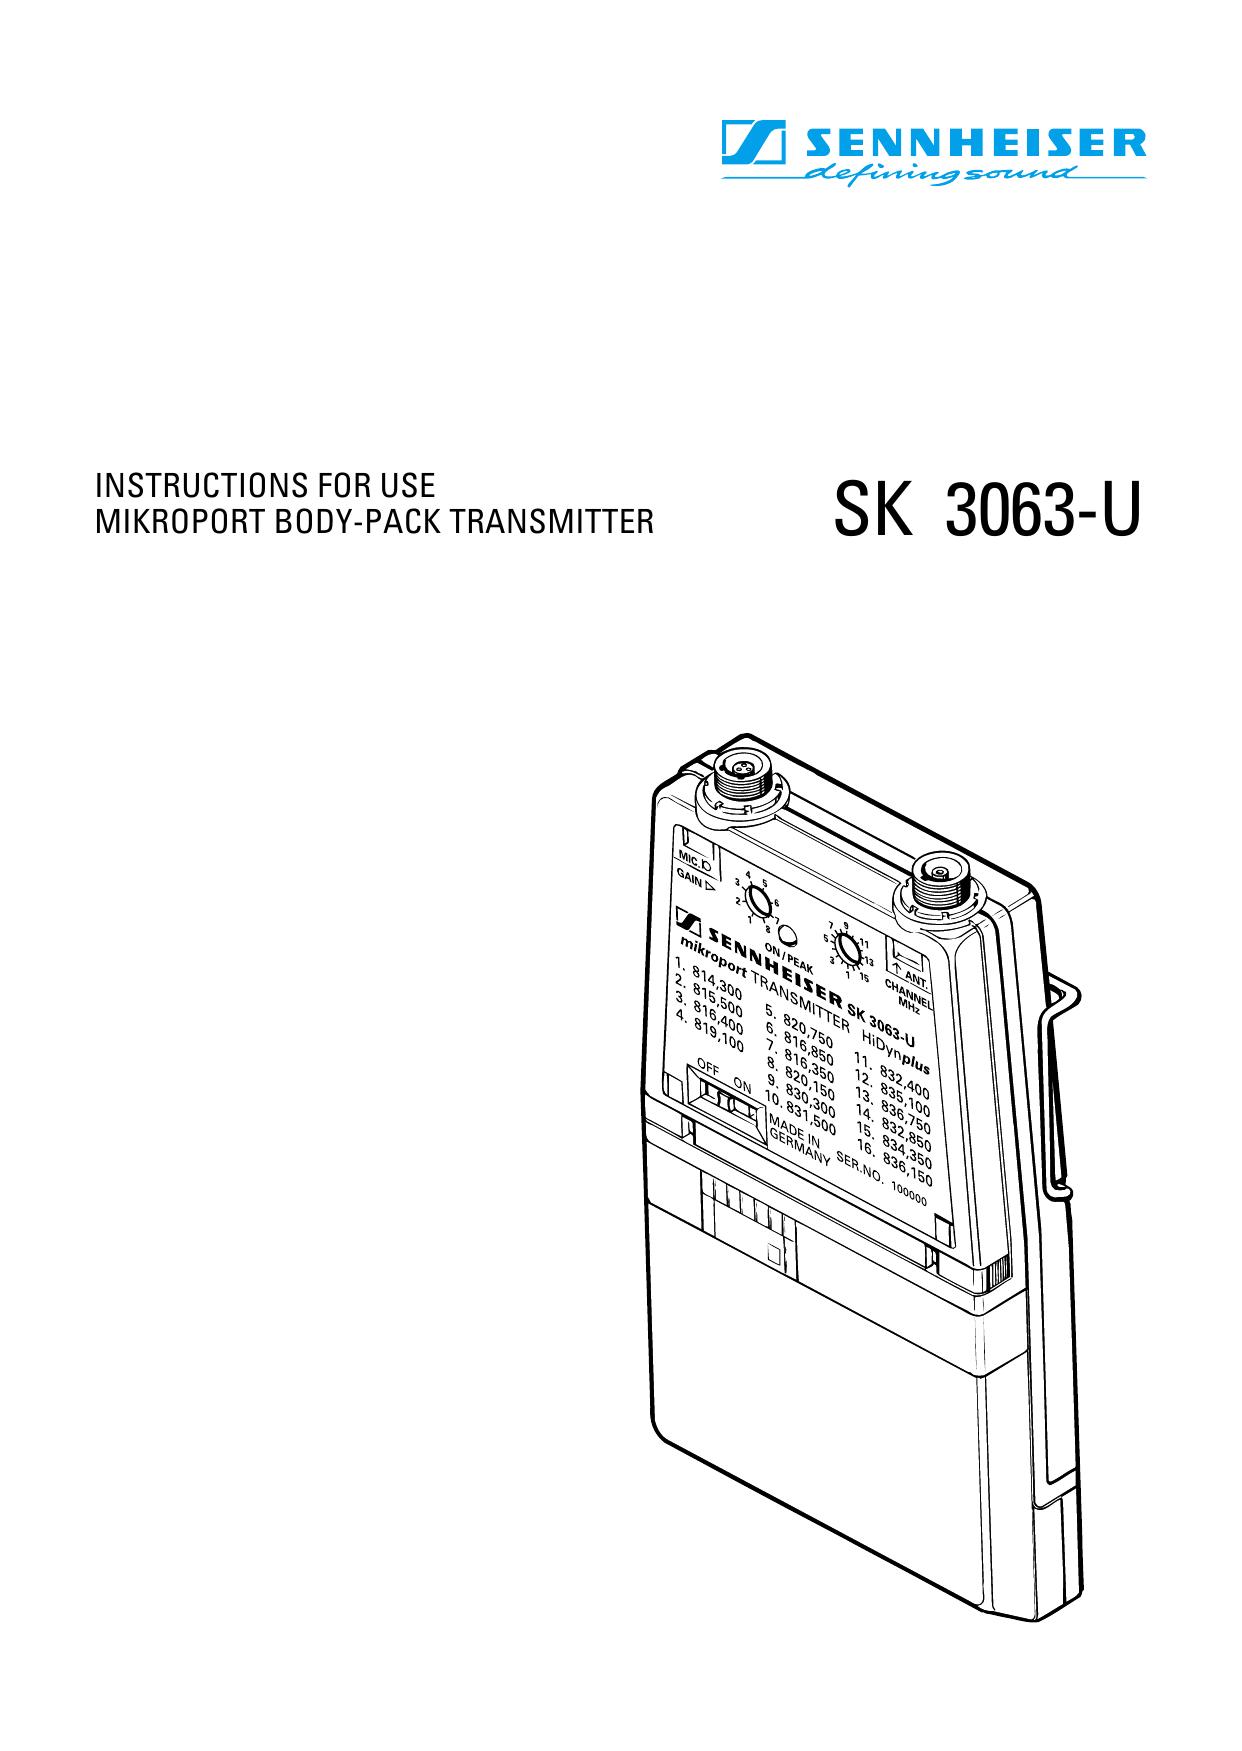 Sennheiser SK 3063-U Pacemaker User Manual